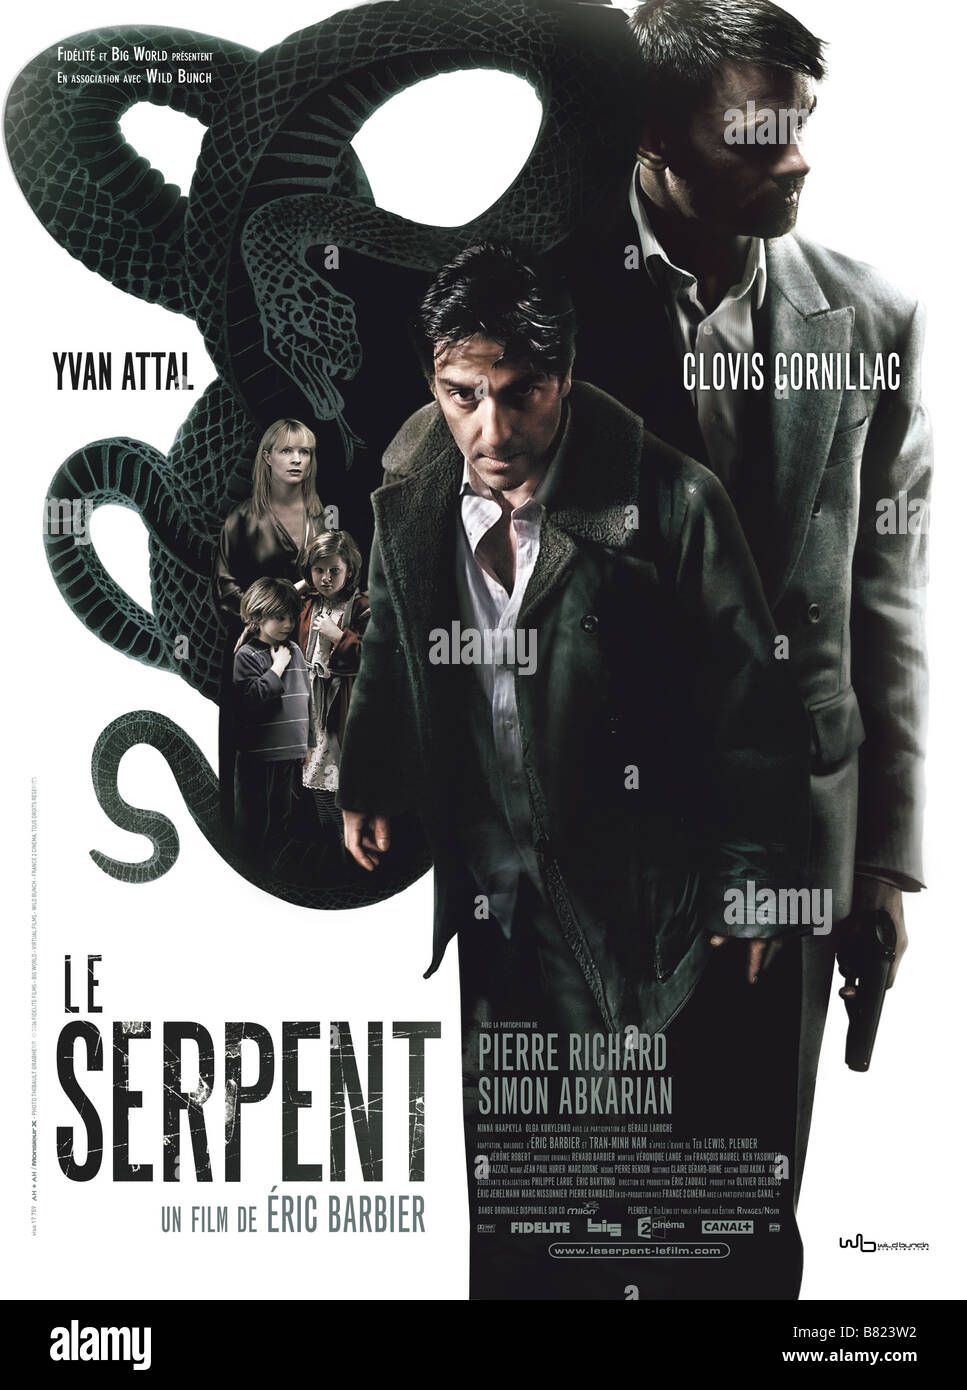 Le Serpent Le Serpent Año: 2006 - Francia Affiche/póster, Yvan Attal, Clovis Cornillac Director: Eric Barbier Foto de stock